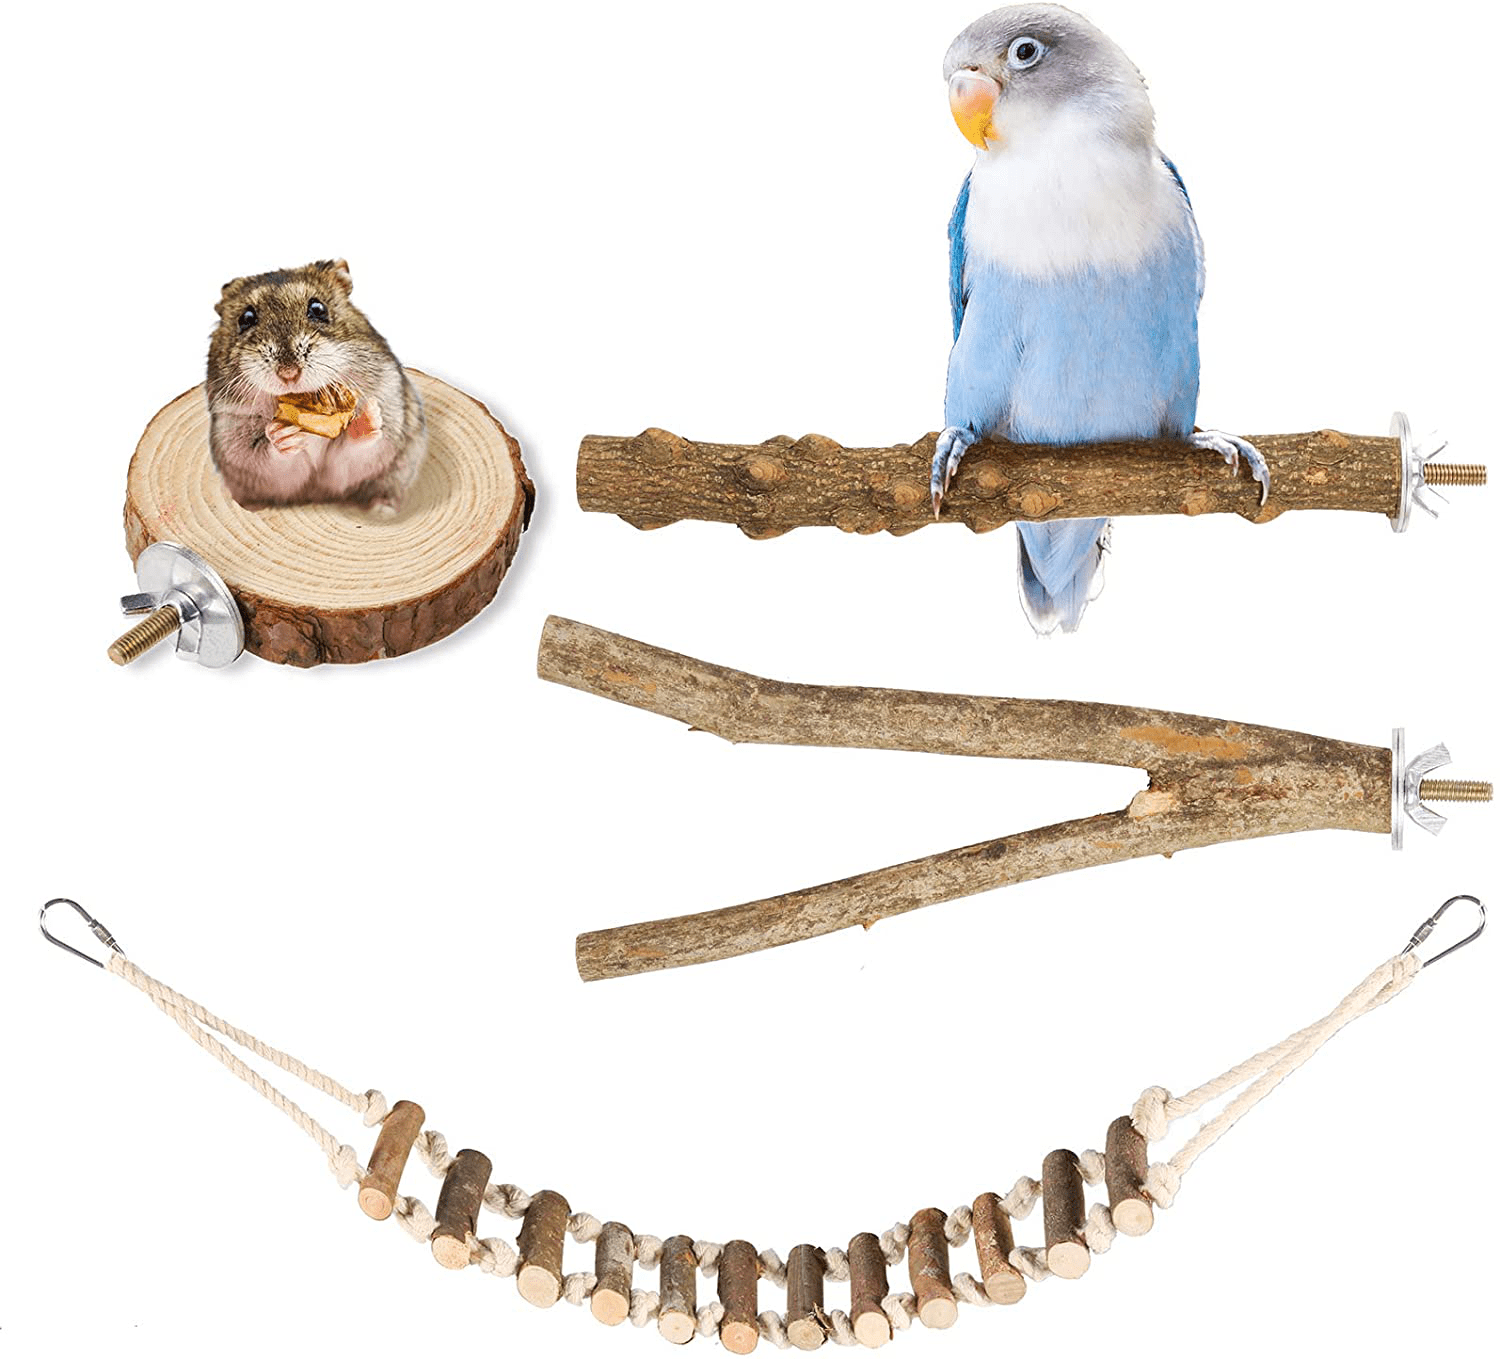 4 Pack Natural Wood Bird Perch for Bird Cages,Parrot Stand Perch Platf –  KOL PET